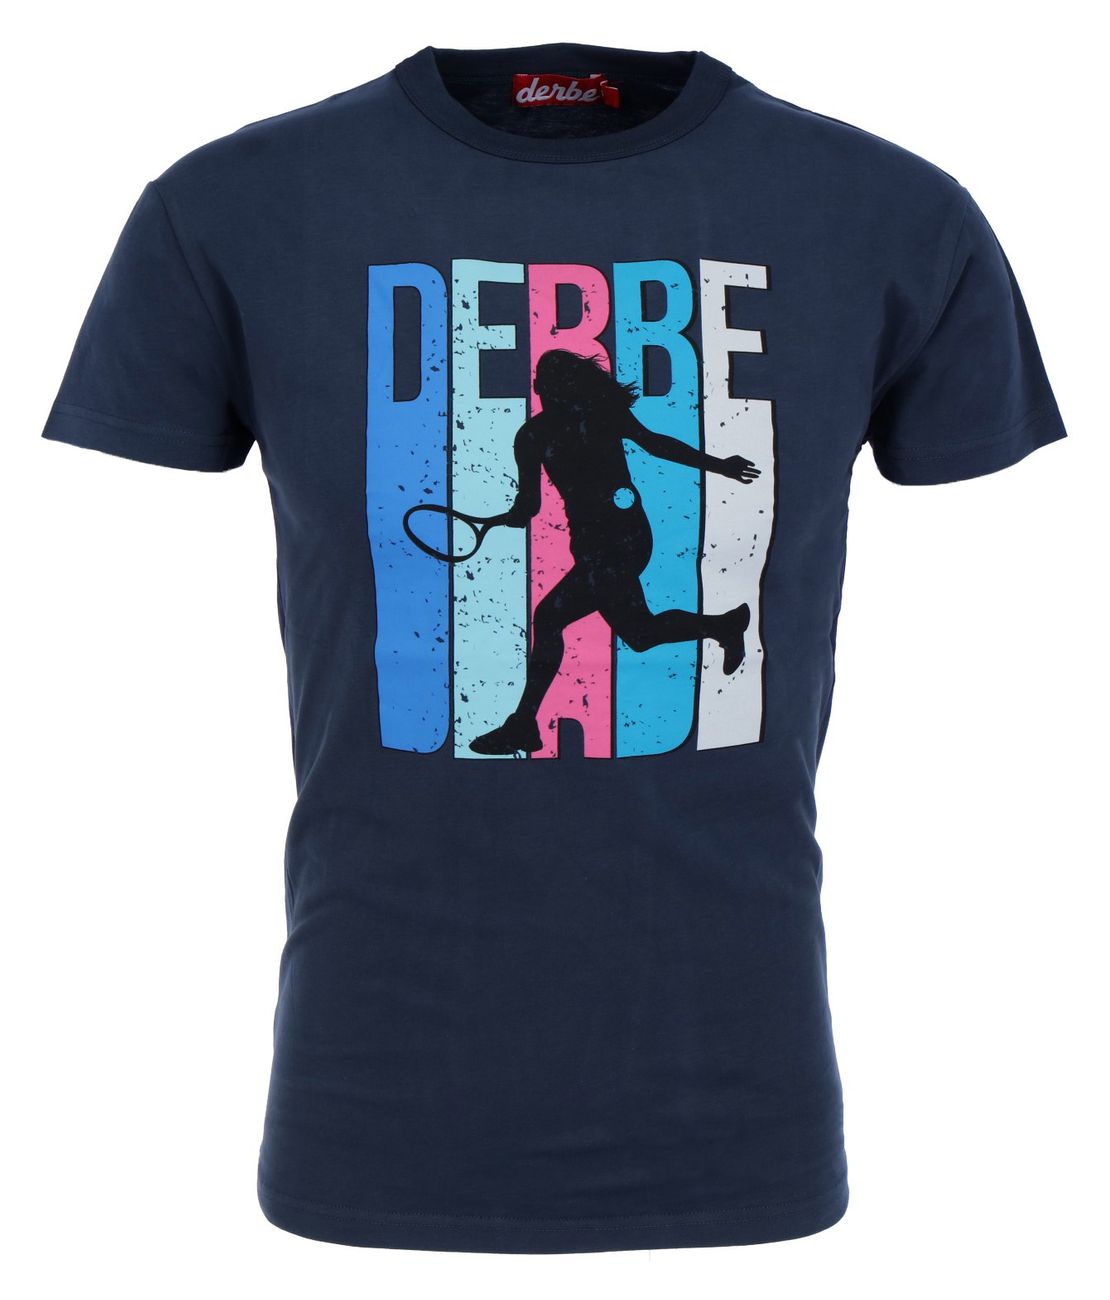 DERBE HAMBURG TENNIS BOYS Herren T-Shirt - Derbe Hamburg - SAGATOO - 4251634730382